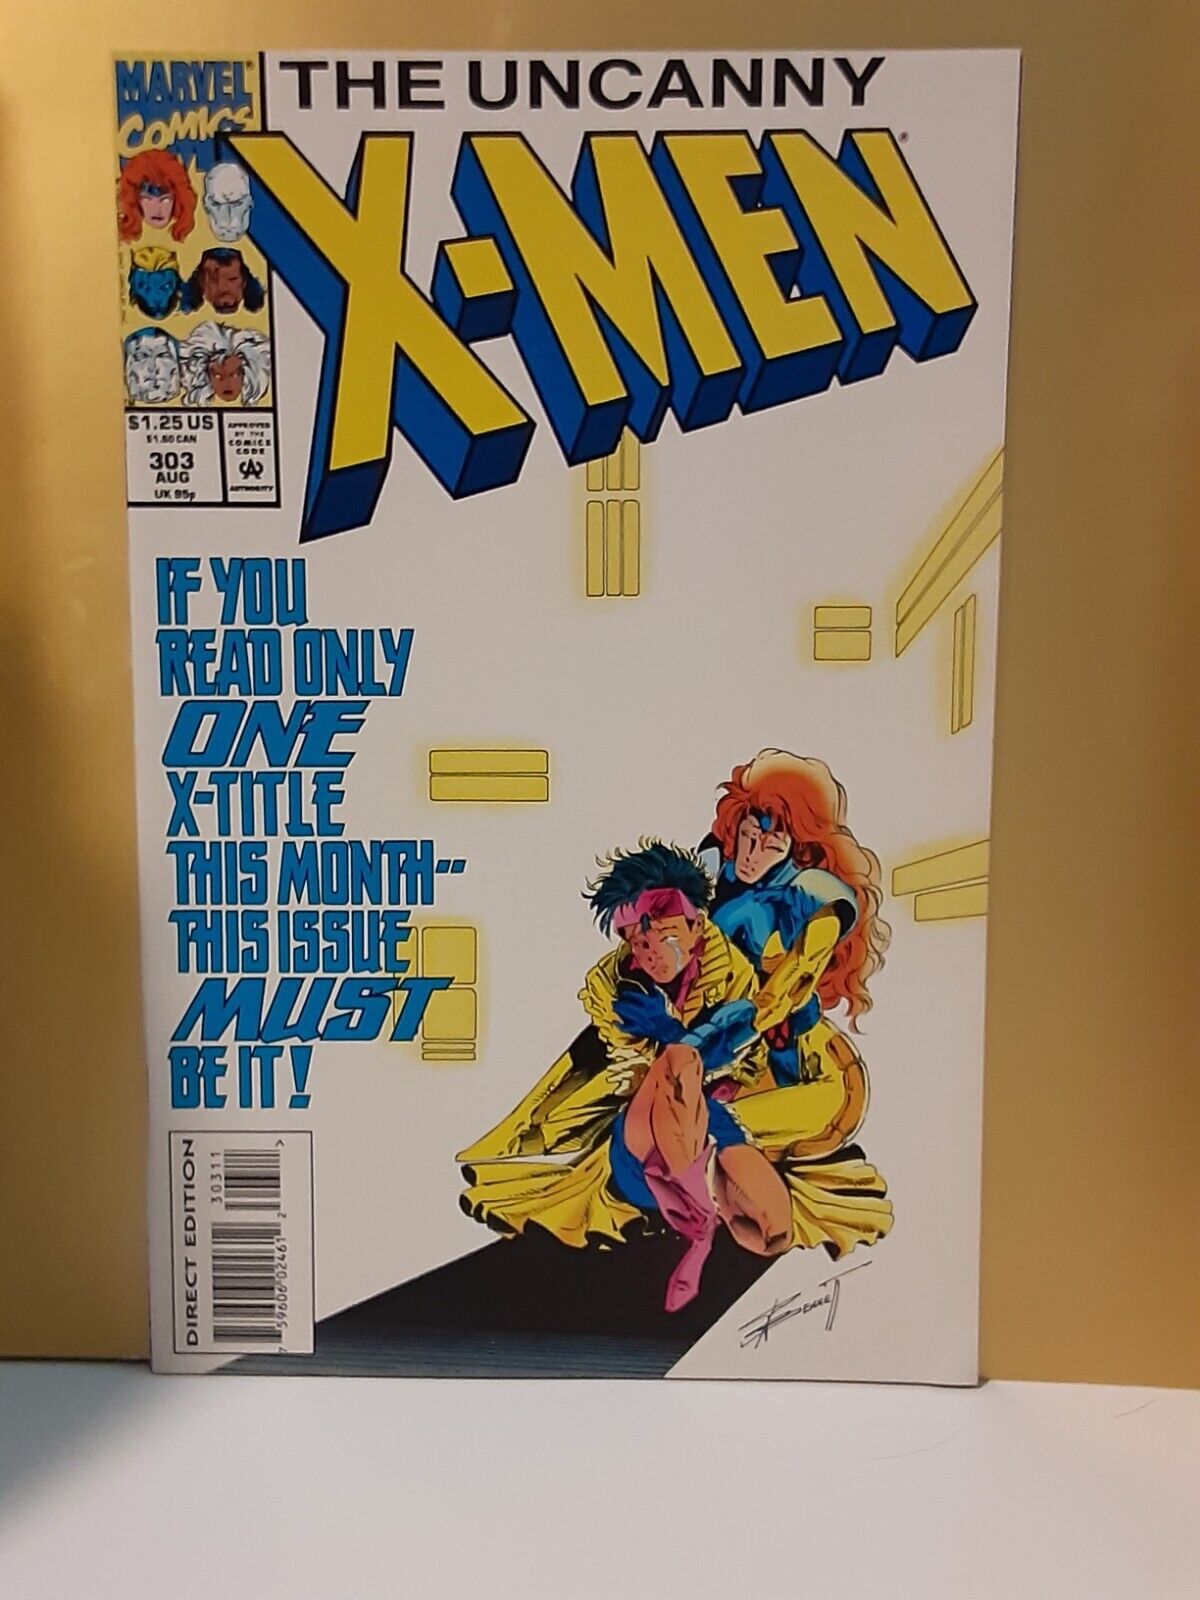 Uncanny X-Men #303 AUG 1993 MARVEL COMICS DEATH OF MAGIK UNREAD NM-MT CONDITION